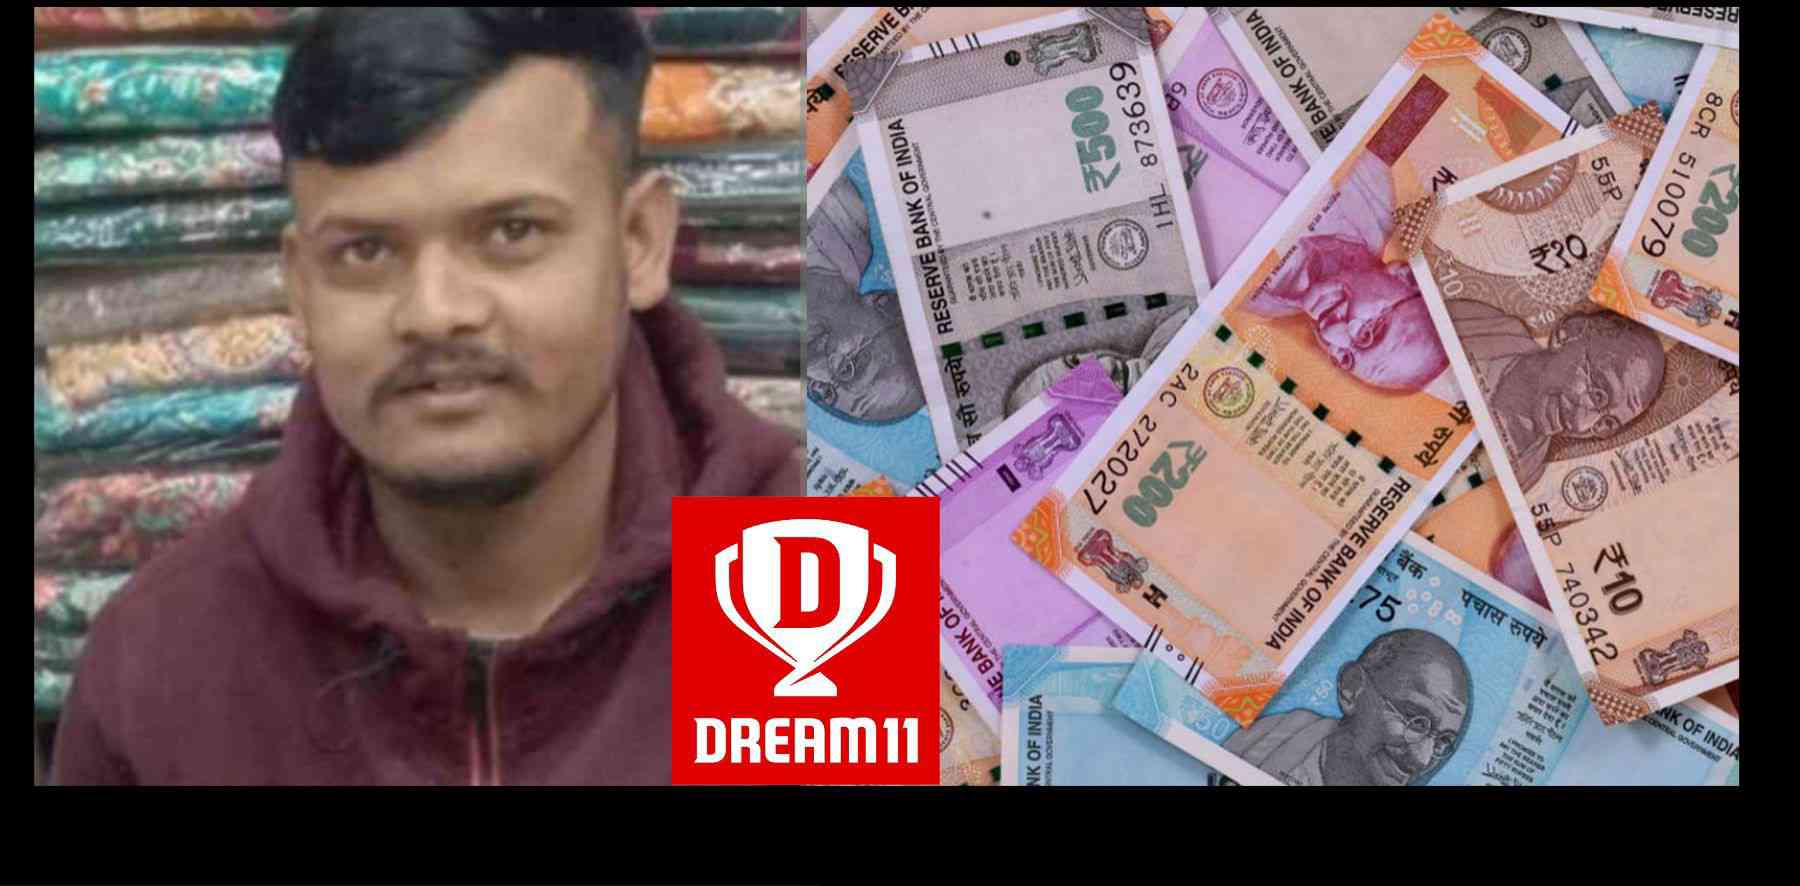 Uttarakhand news: Praveen Kumar of almora, won 20 lakh rupees from dream11. Praveen Kumar Dream11 Almora